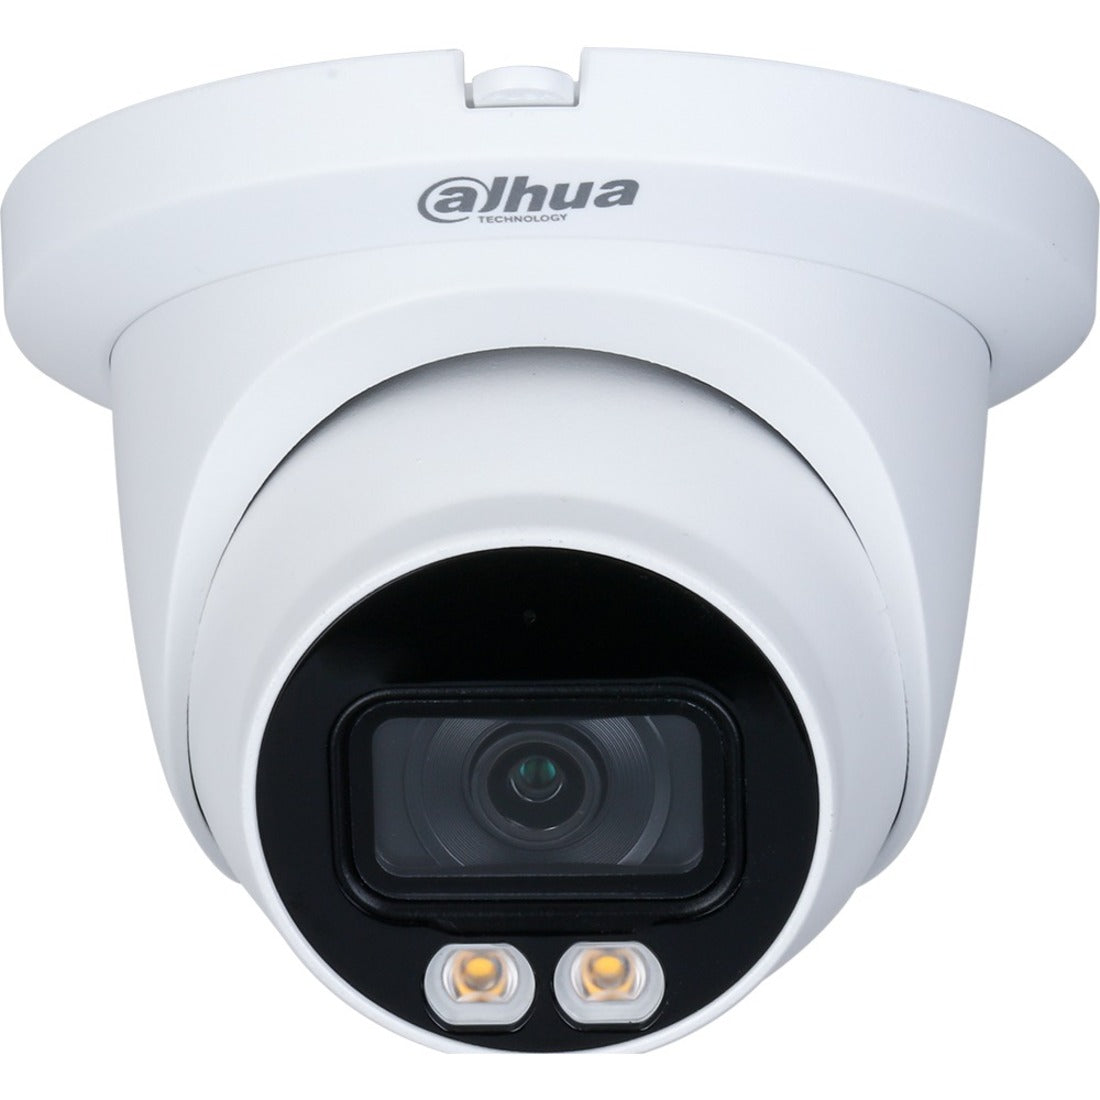 Dahua N43BJ62 4MP Night Color 2.0 Fixed-lens Network Eyeball Camera, Outdoor, IP67, 5 Year Warranty